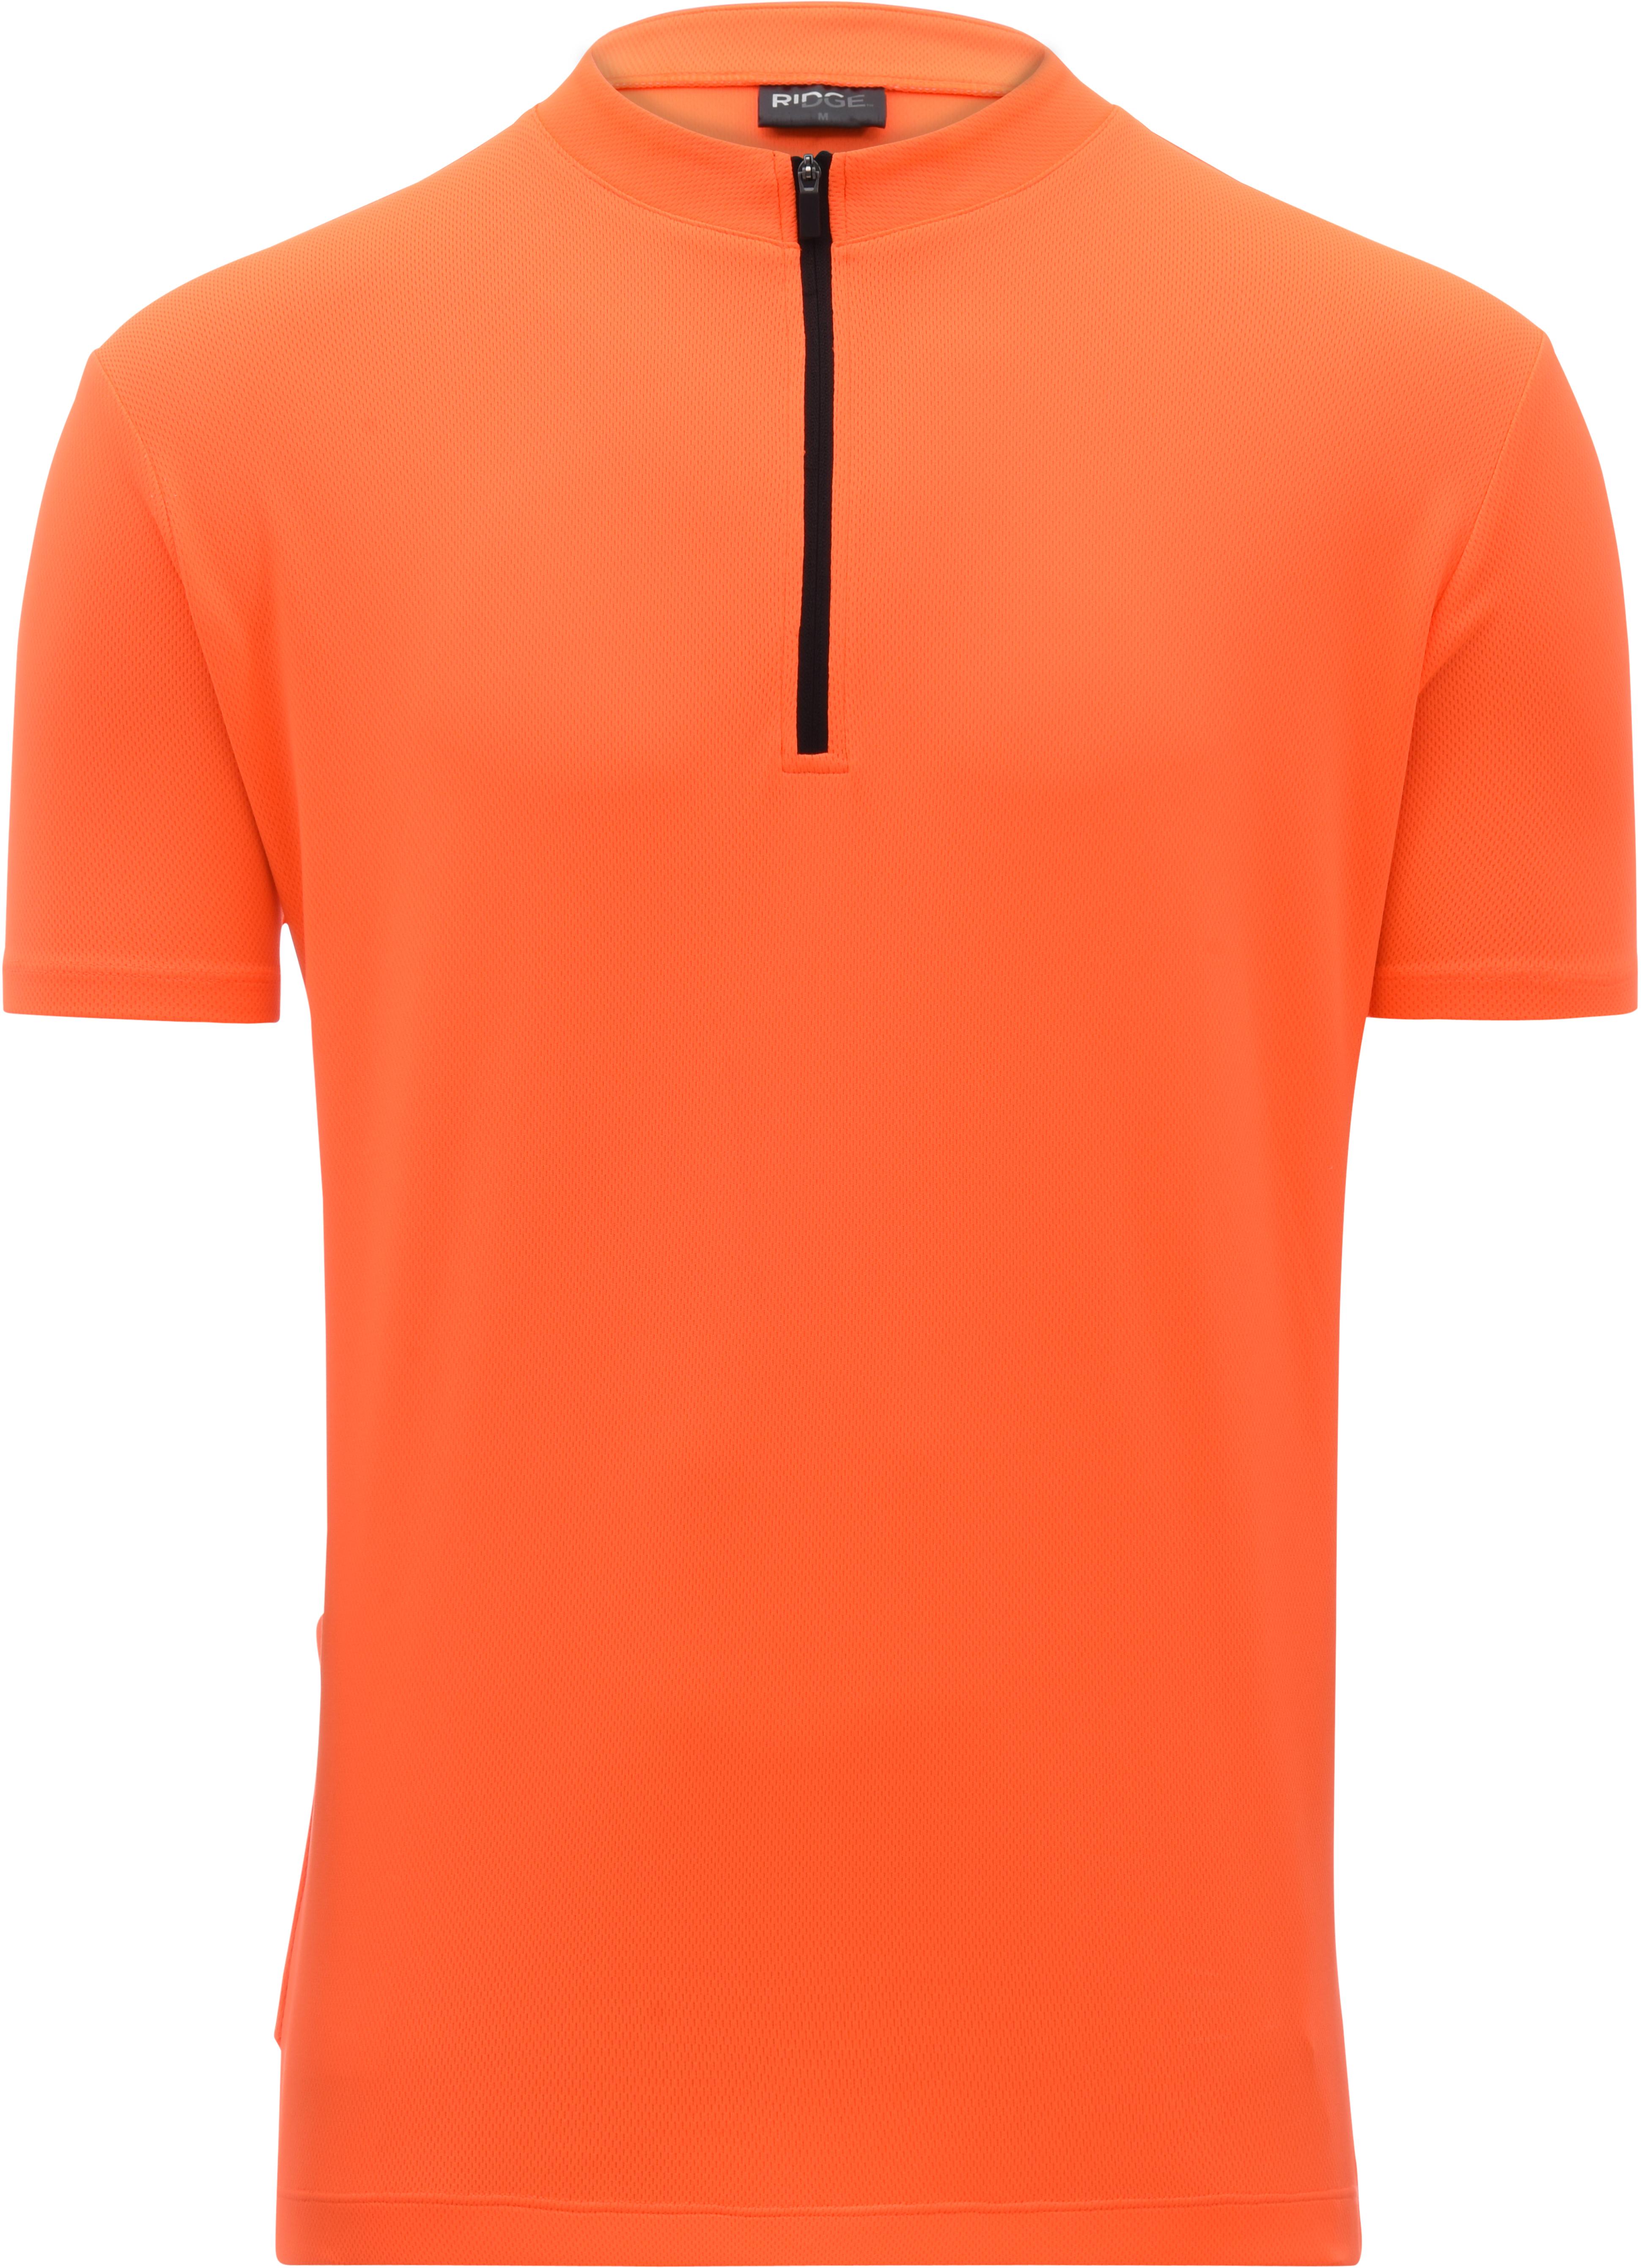 Ridge Mens Cycling Jersey - Orange Medium